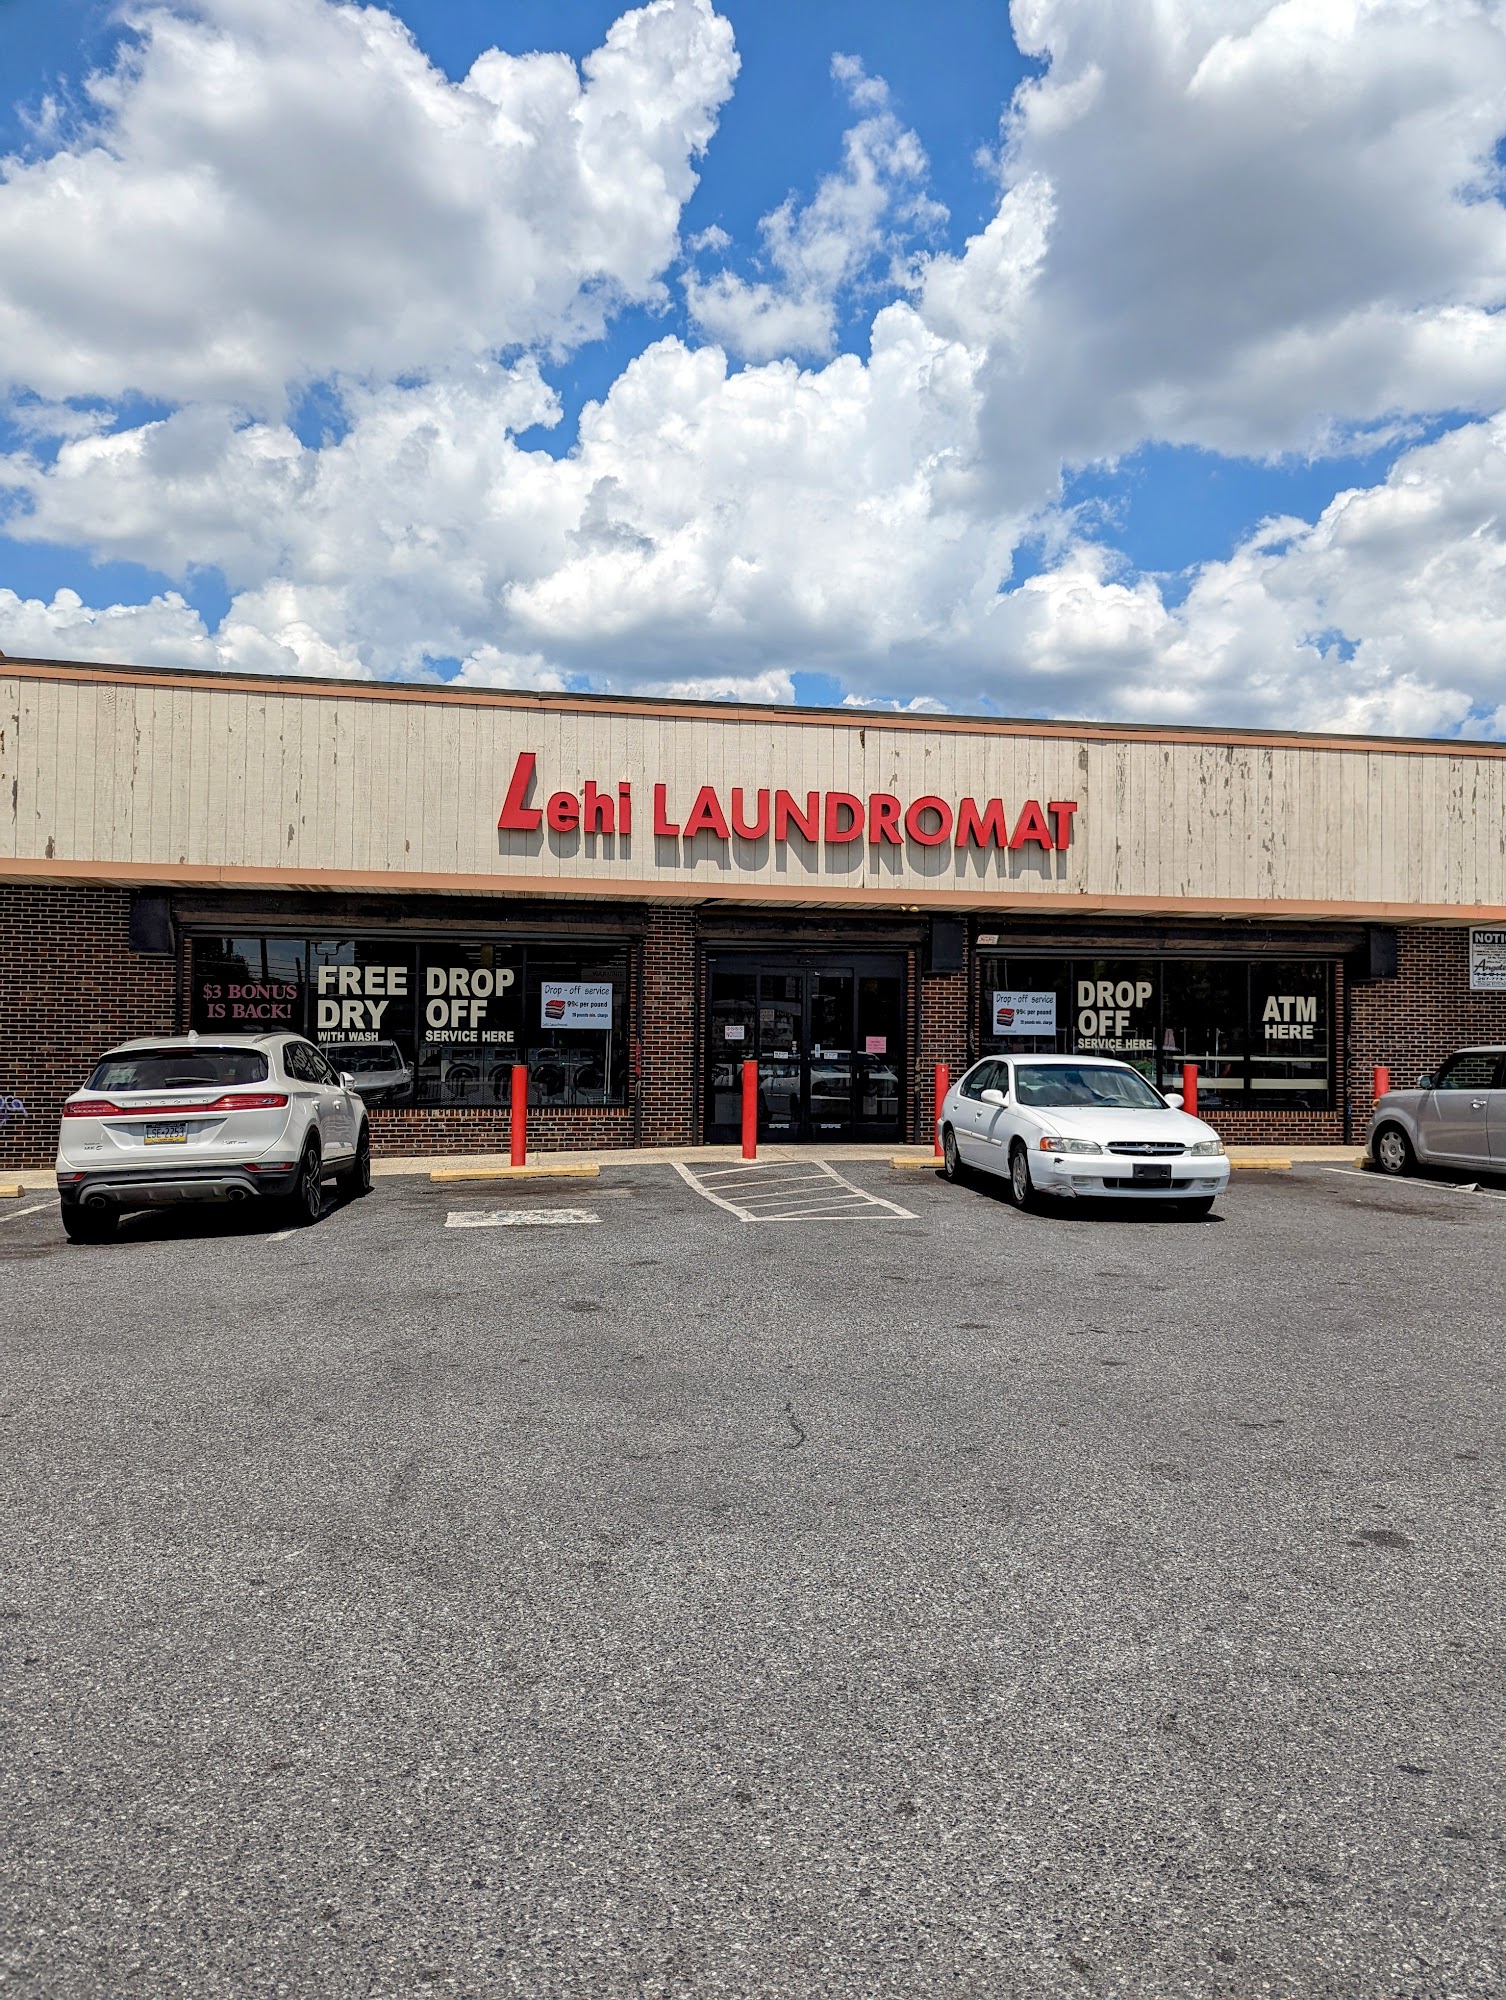 Lehigh Laundromat